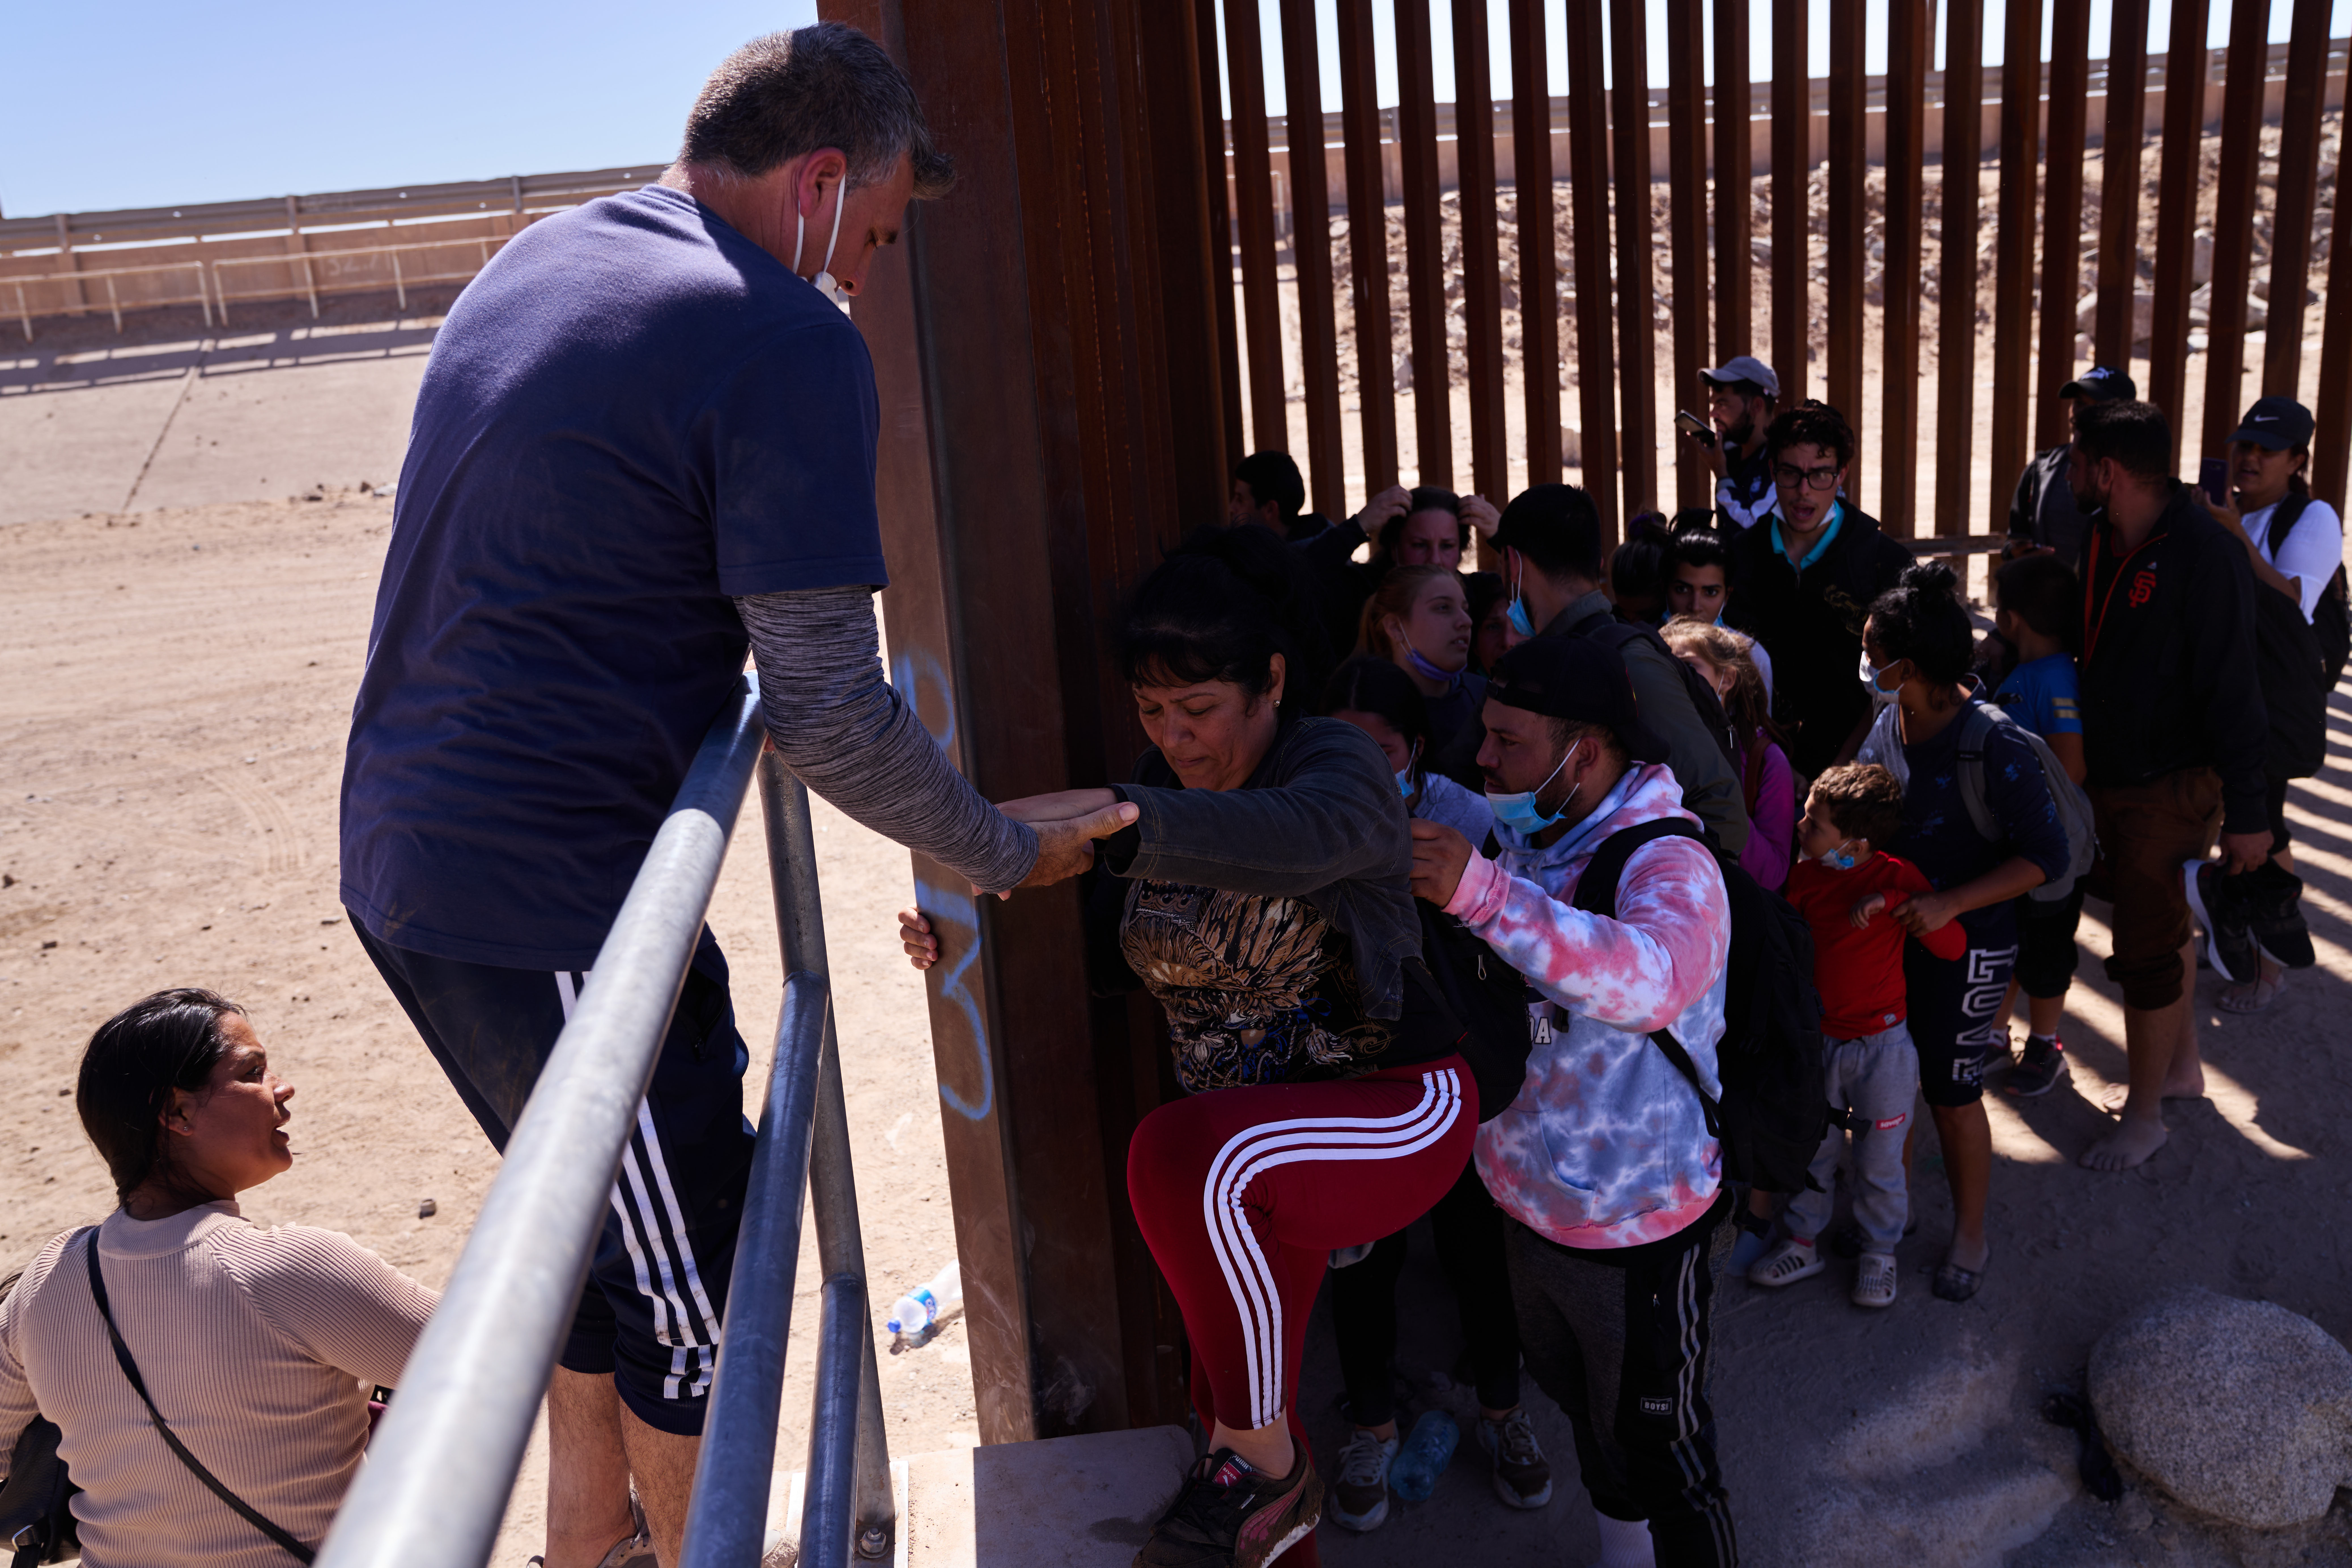 People cross into the U.S. through gap in the border wall in Yuma